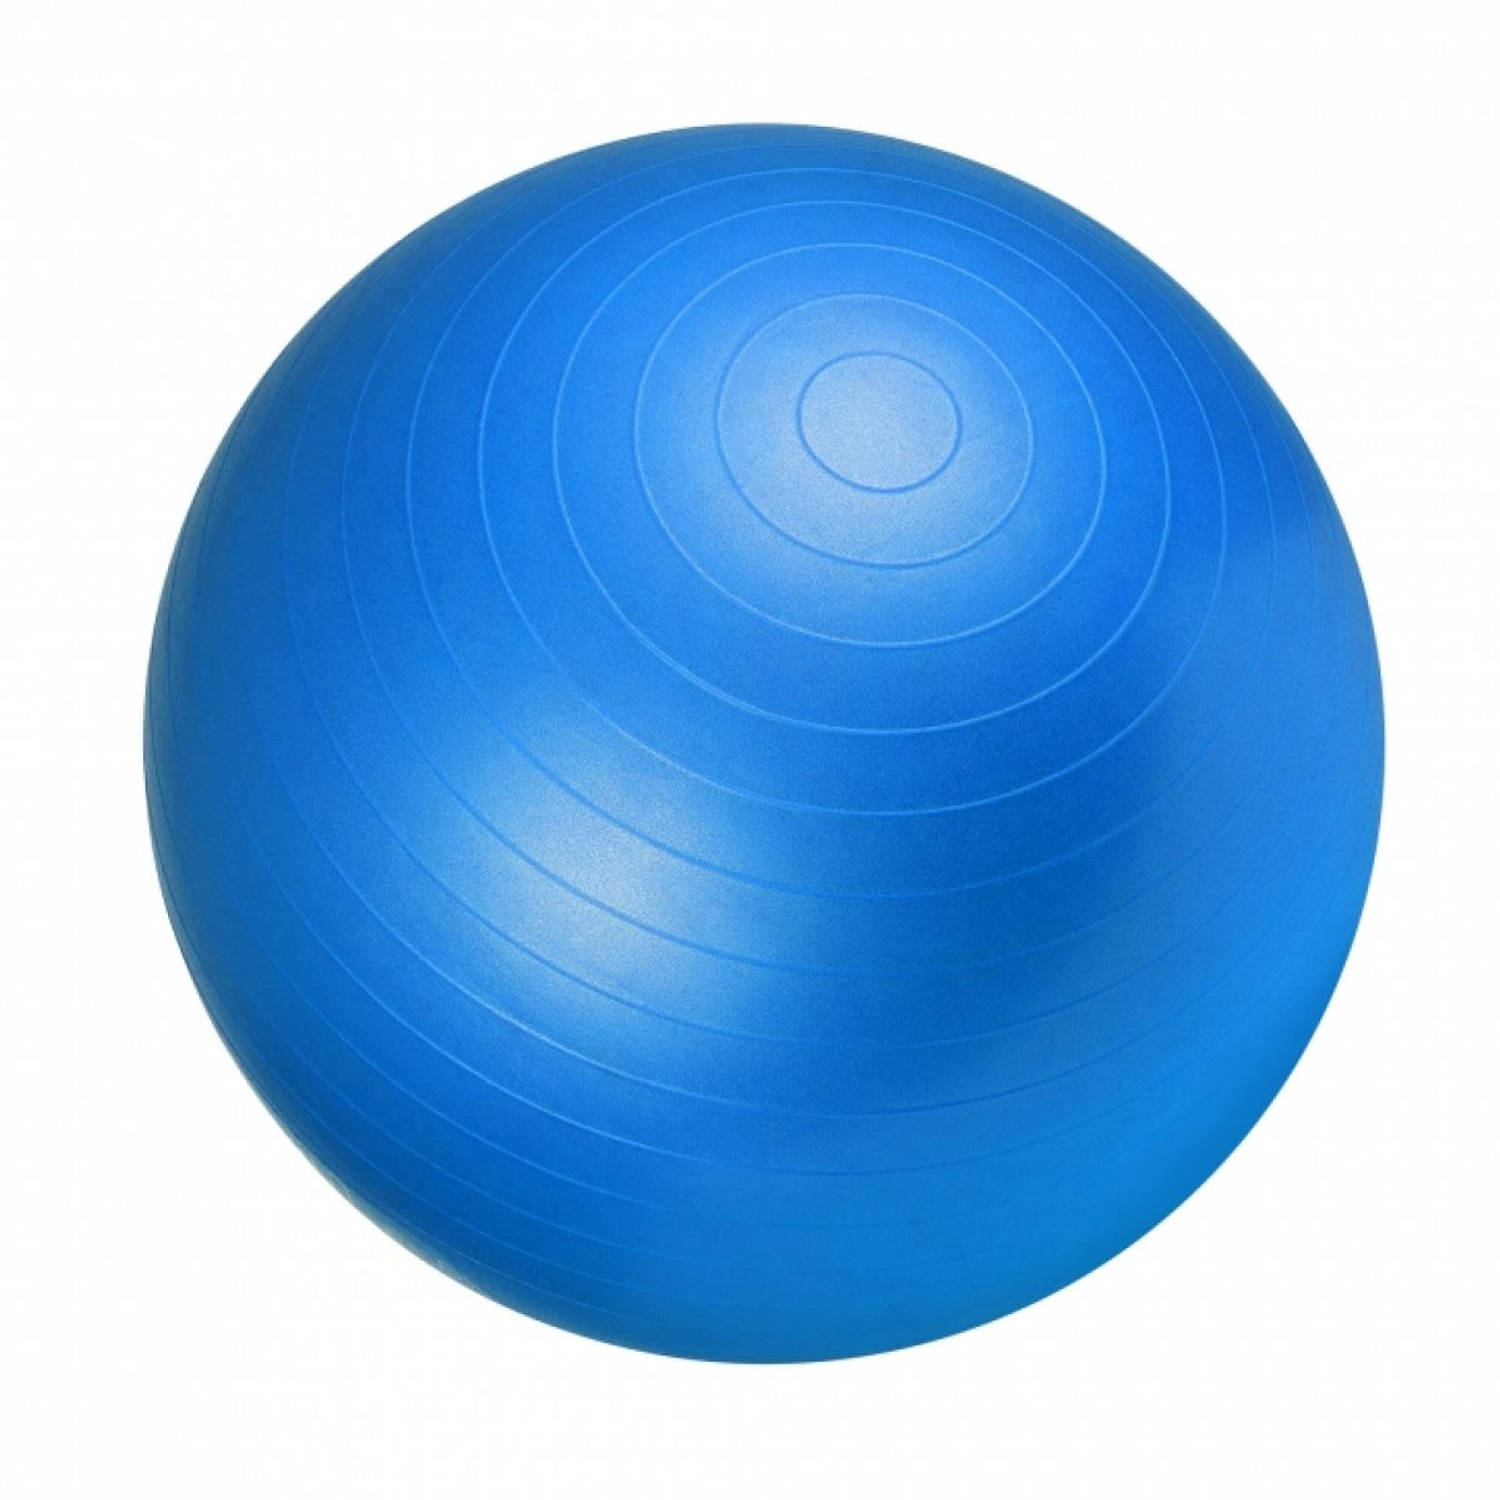 Gorilla Sports Fitness bal blauw 65 cm incl. handige pomp